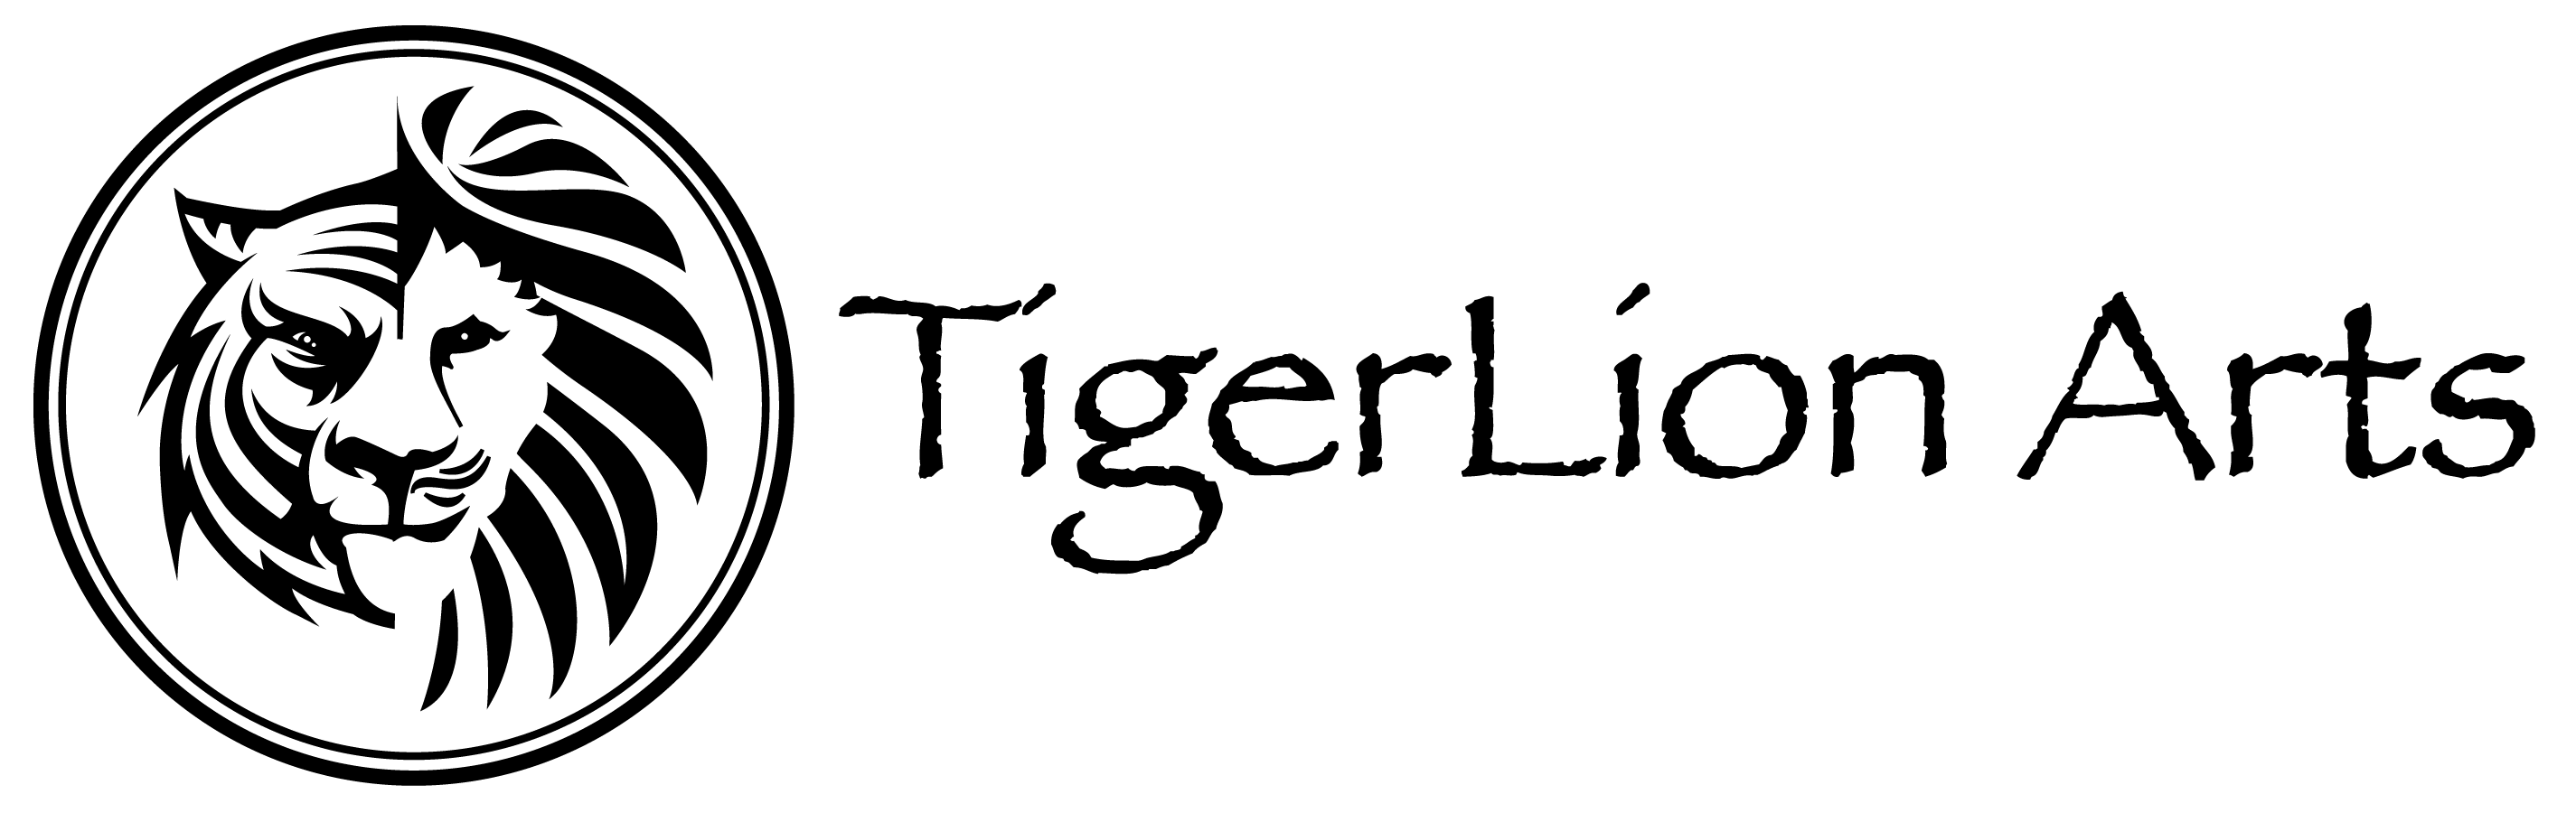 TigerLion Arts logo